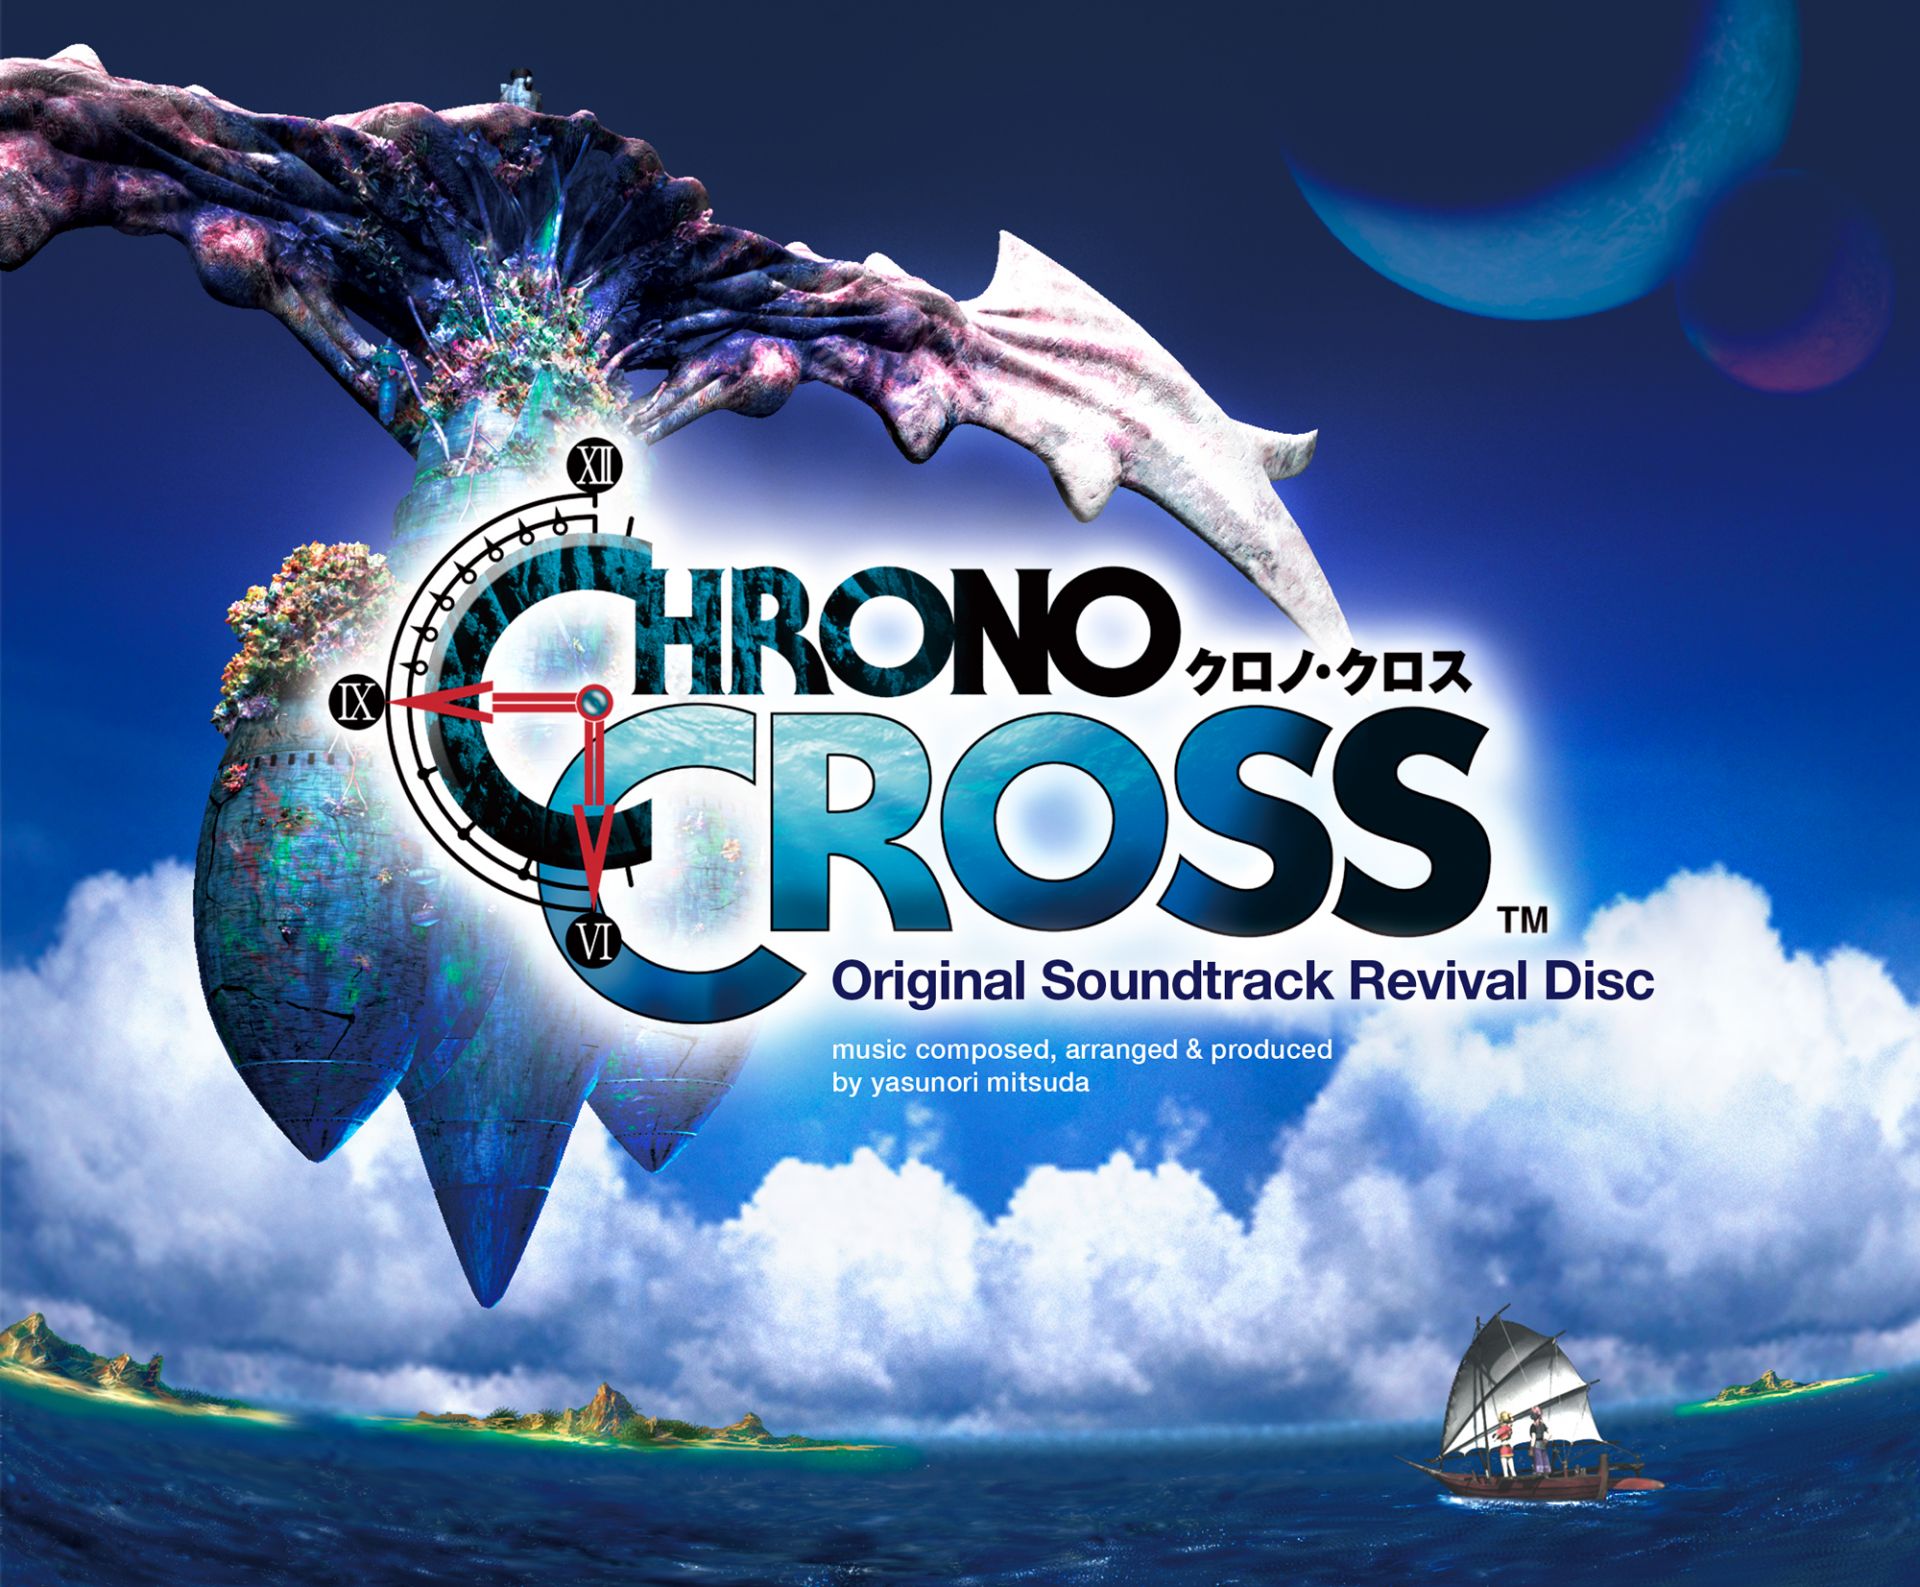 CHRONO CROSS Original Soundtrack Revival Disc [Blu-Ray] | Tienda ...